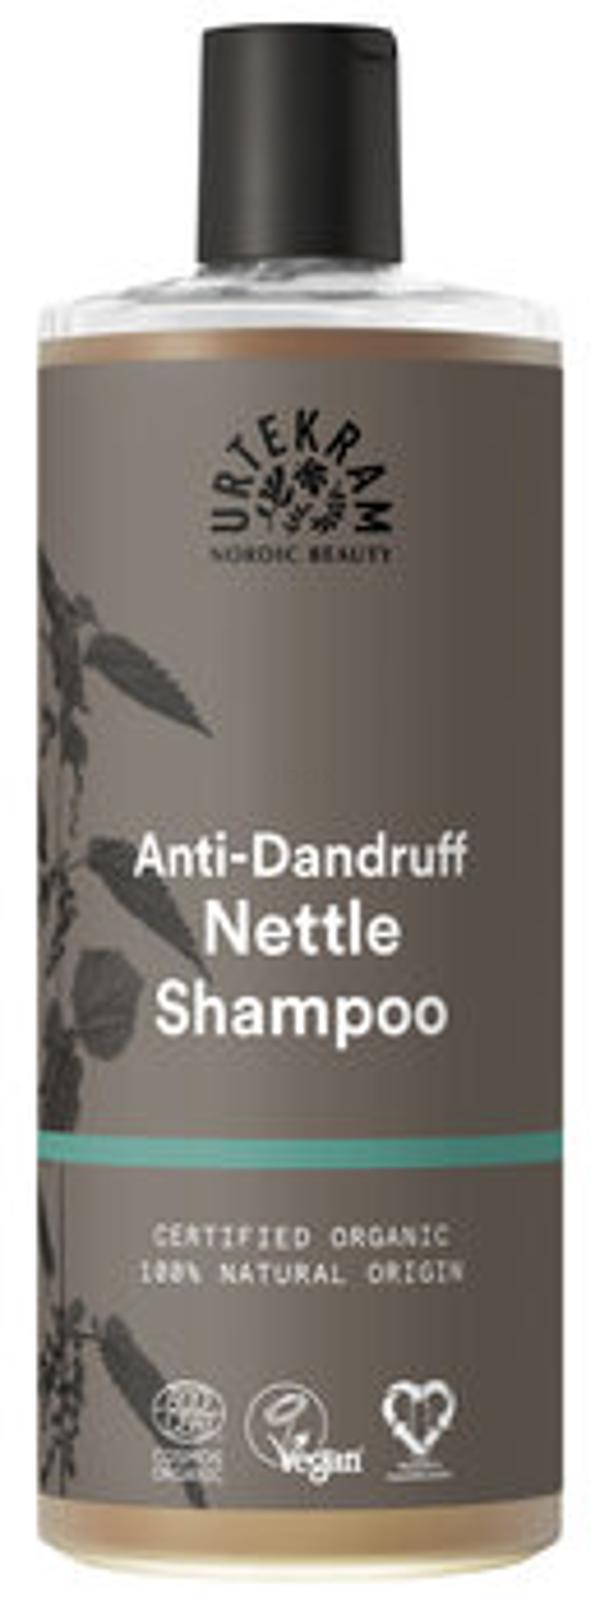 Produktfoto zu Shampoo Brennessel